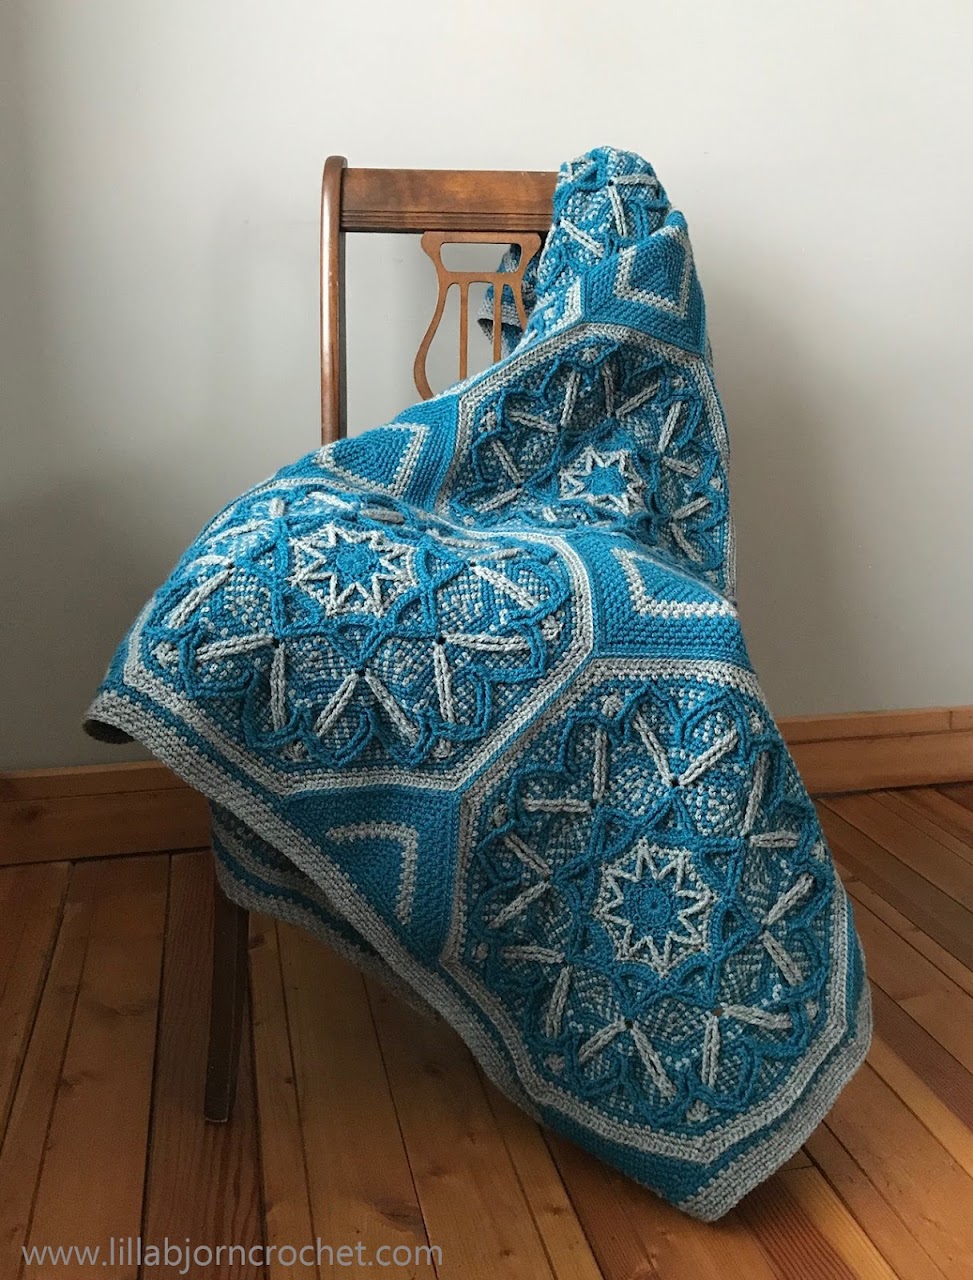 First Snow overlay crochet blanket - pattern on www.lillabjorncrochet.com